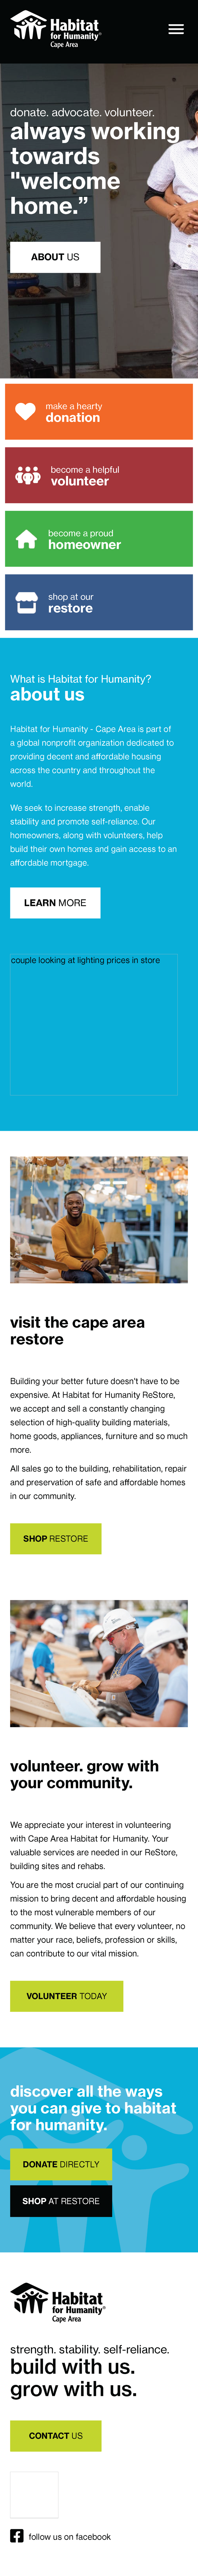 Cape Area Habitat for Humanity